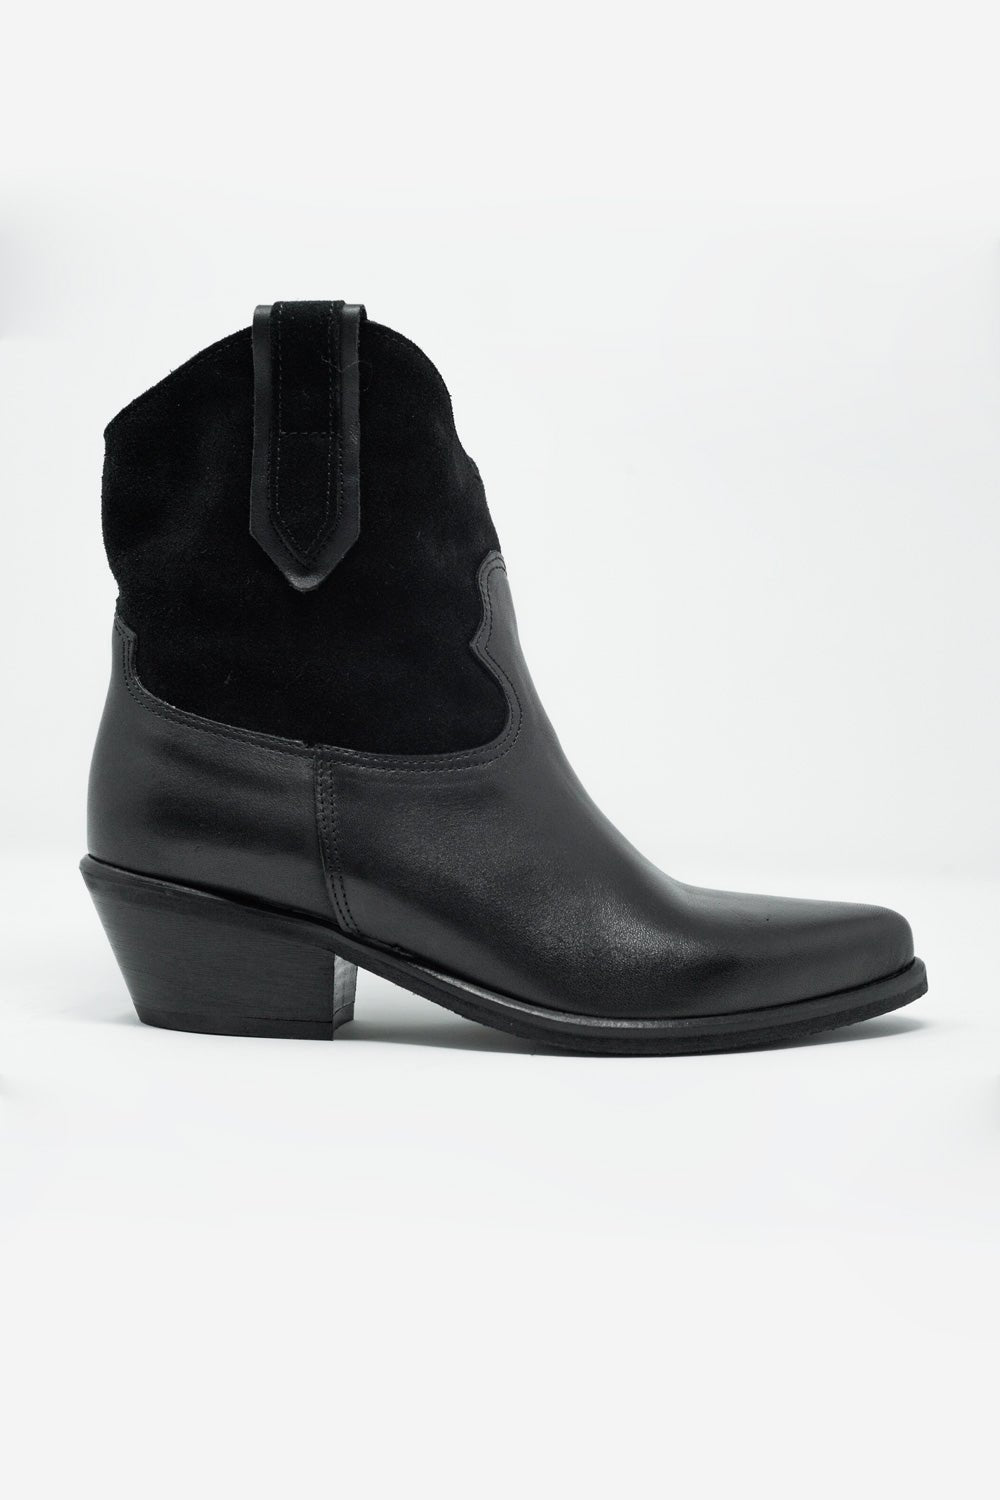 Black Western Sock Boots With Suede Detail - Mack & Harvie